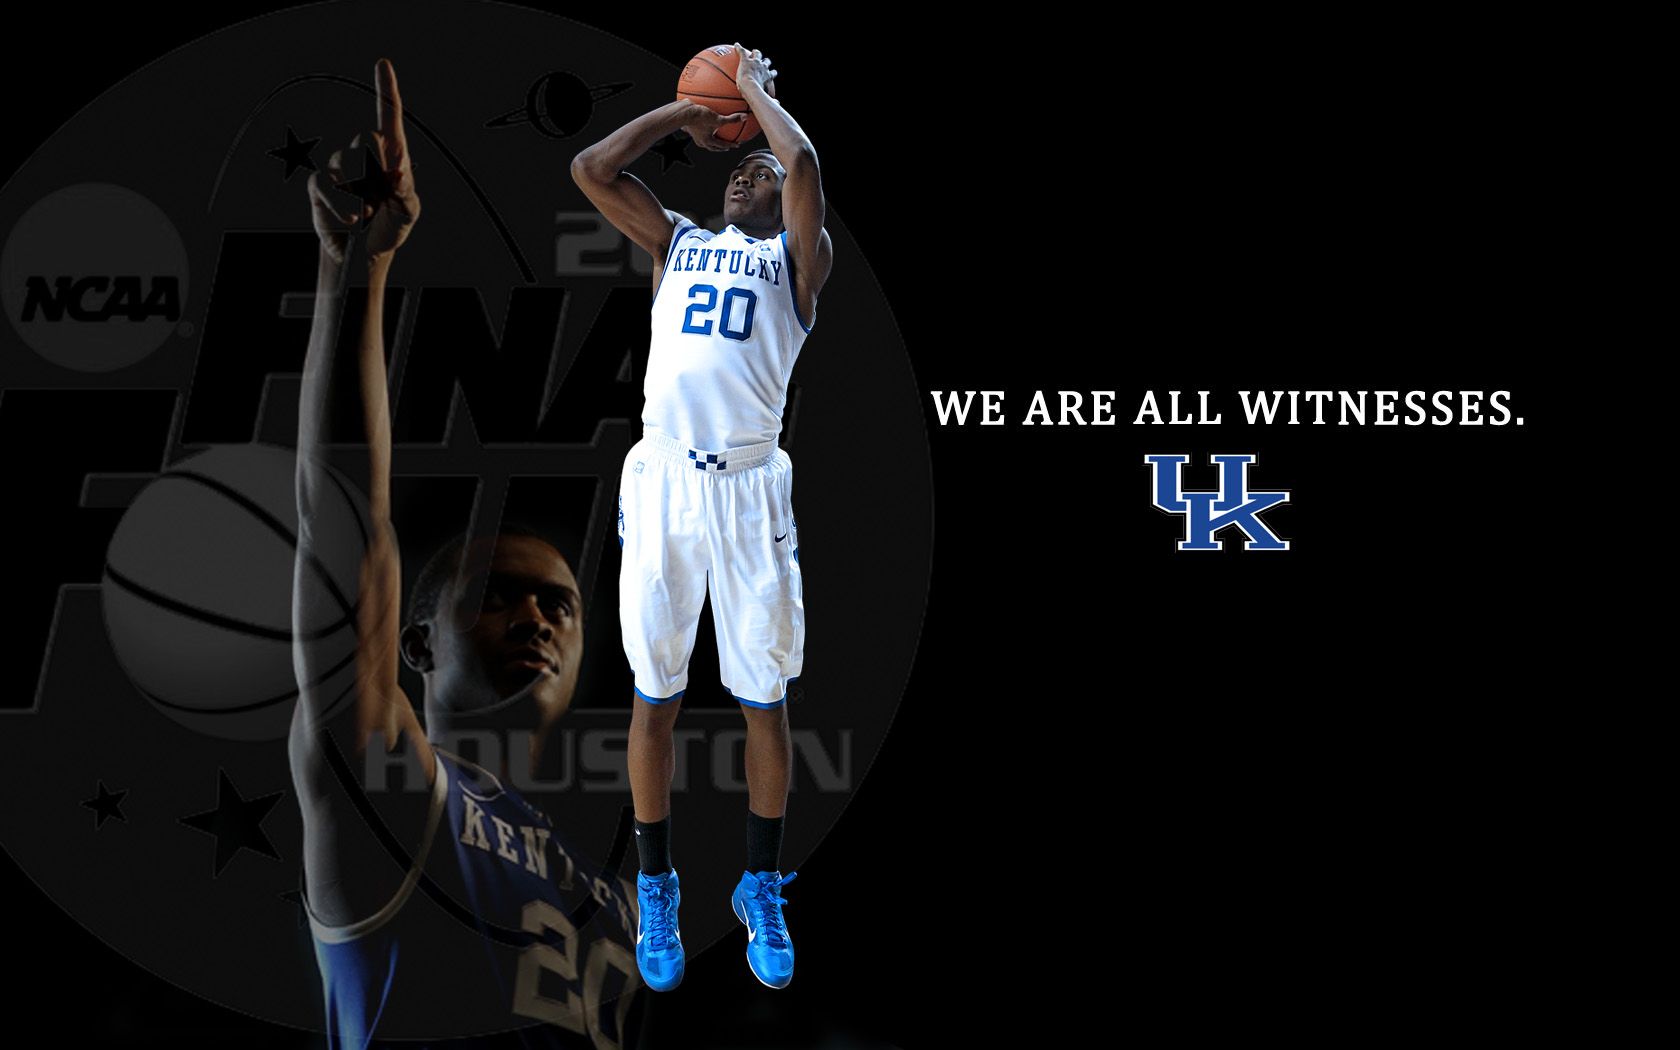 New Kentucky basketball wallpaper uploaded…